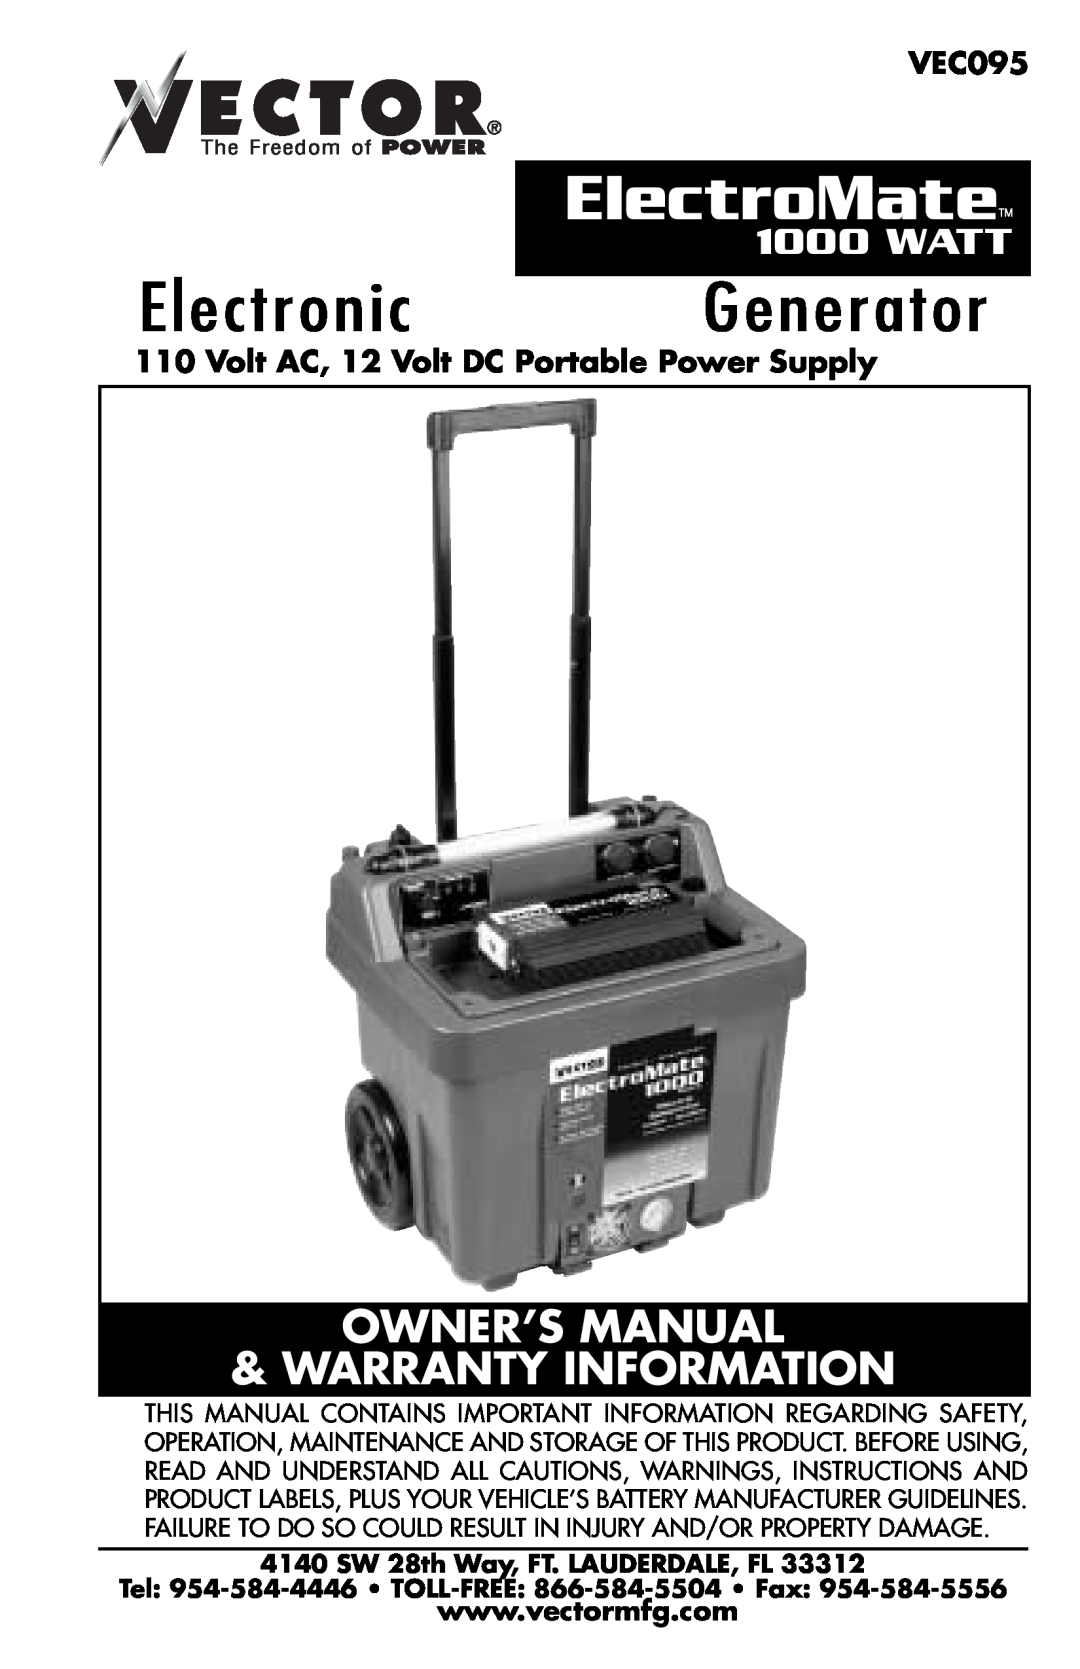 Vector 1000 WATT owner manual VEC095, Volt AC, 12 Volt DC Portable Power Supply, ElectroMate, ElectronicGenerator, Watt 